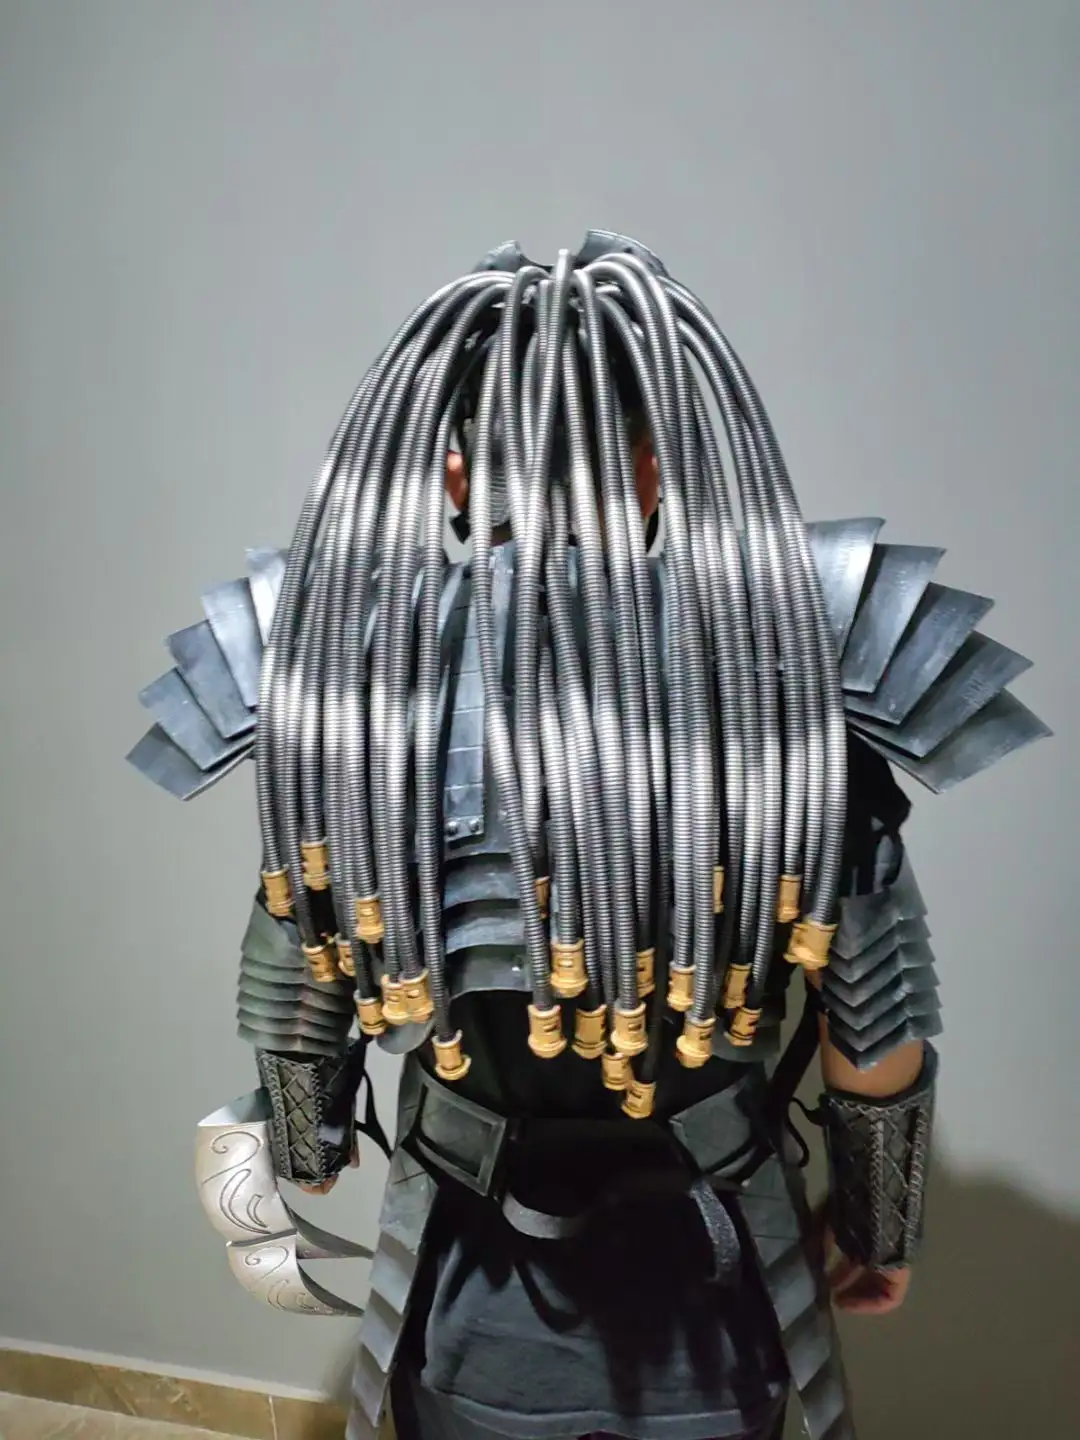 Vente en gros Offre Spéciale incroyable réaliste Iron Blood MechWarrior Animatronic Robot Cosplay TV & Film Robot Costume